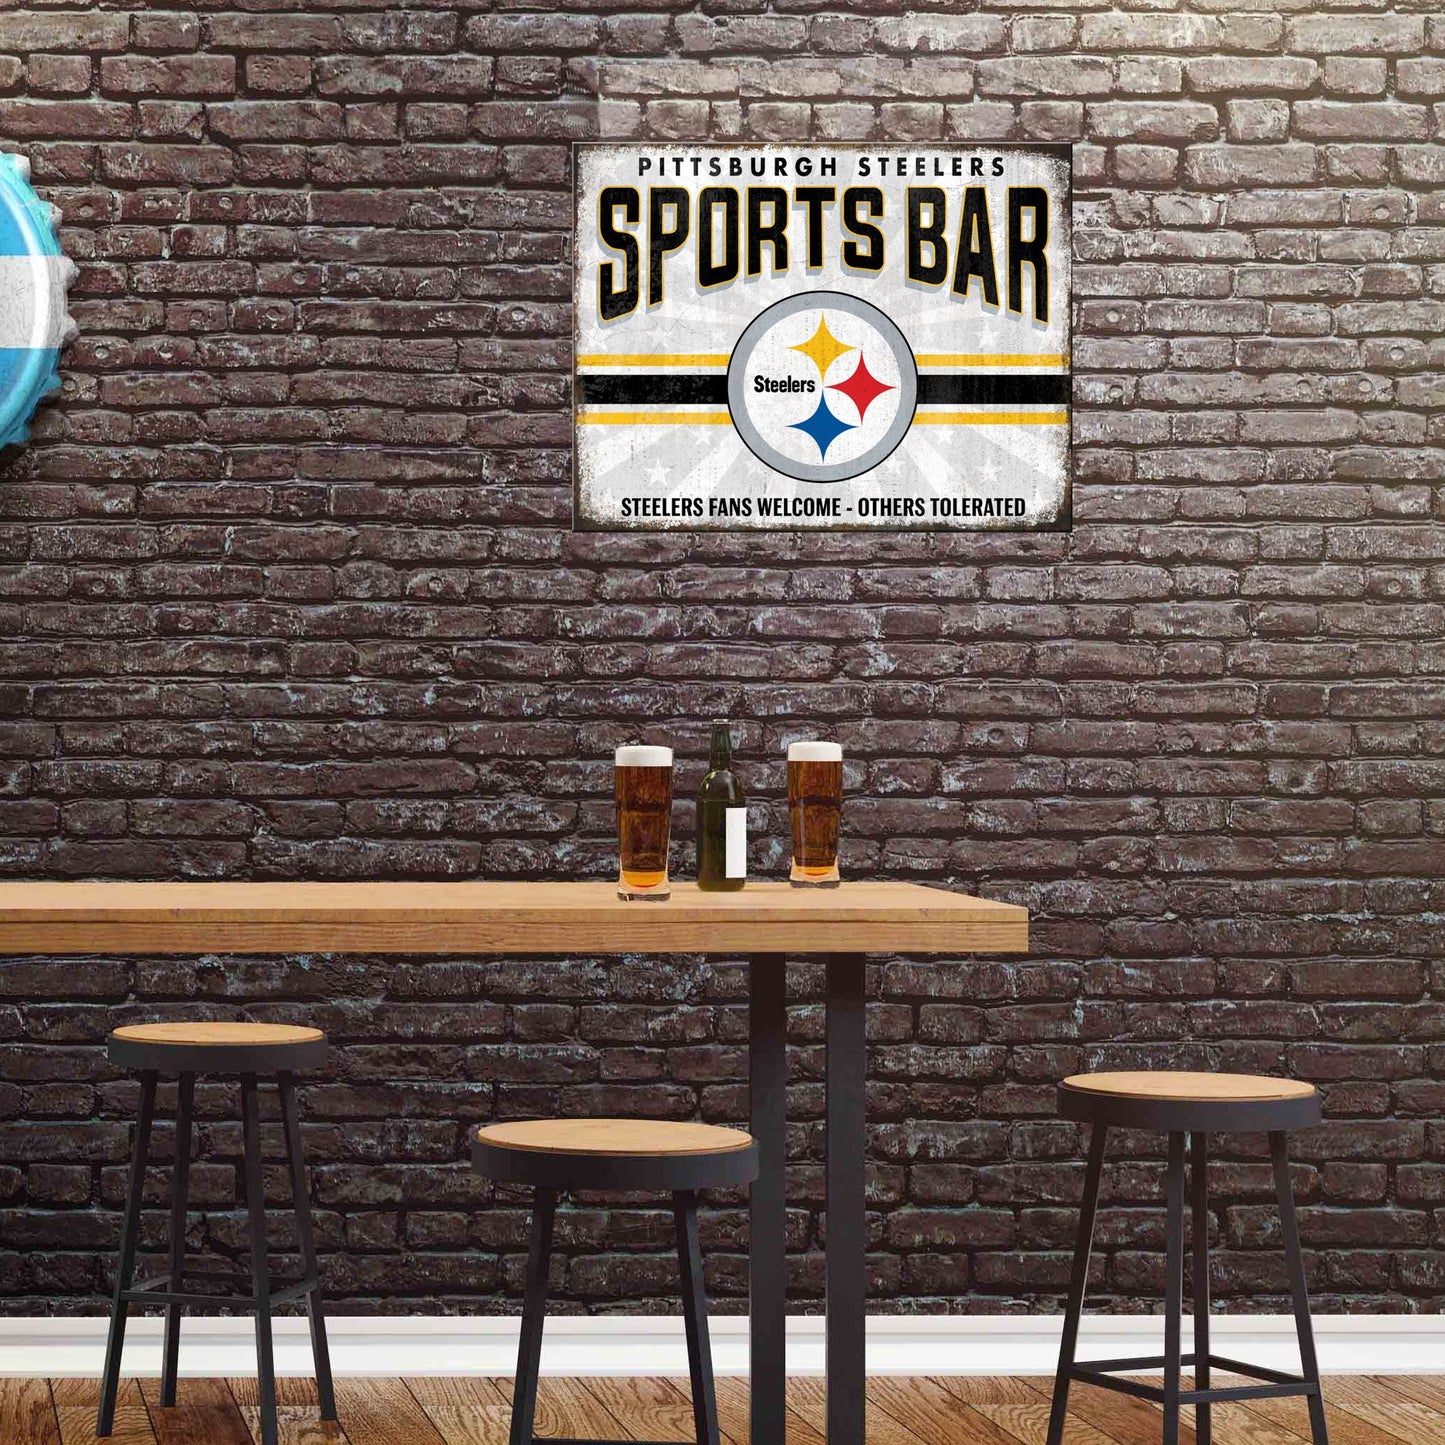 Pittsburgh Steelers NFL Sports Bar Metal Sign